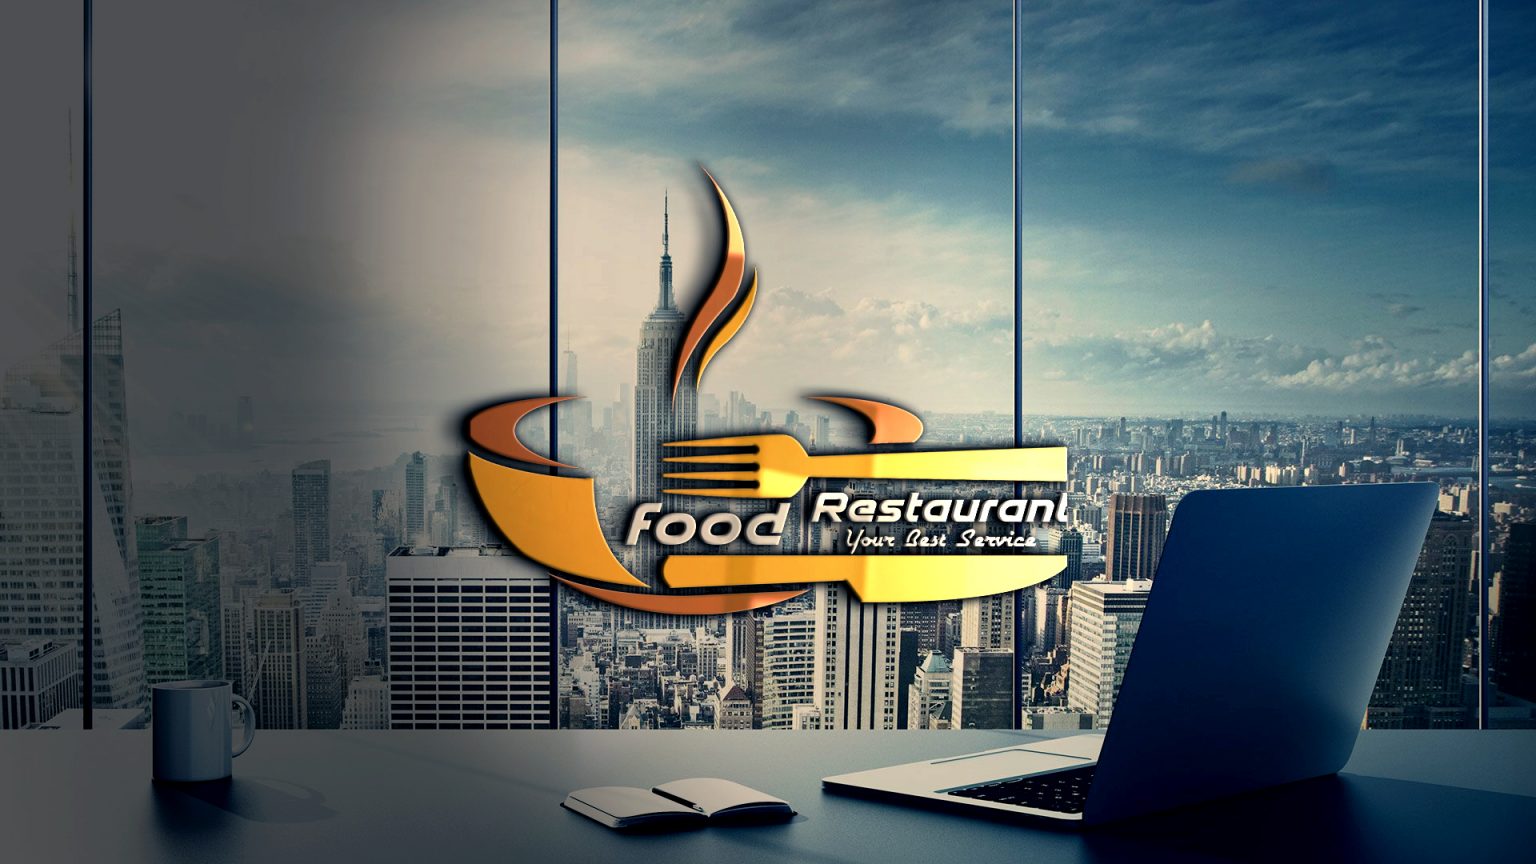 Modern Restaurant Logo Design Free Template Download – GraphicsFamily